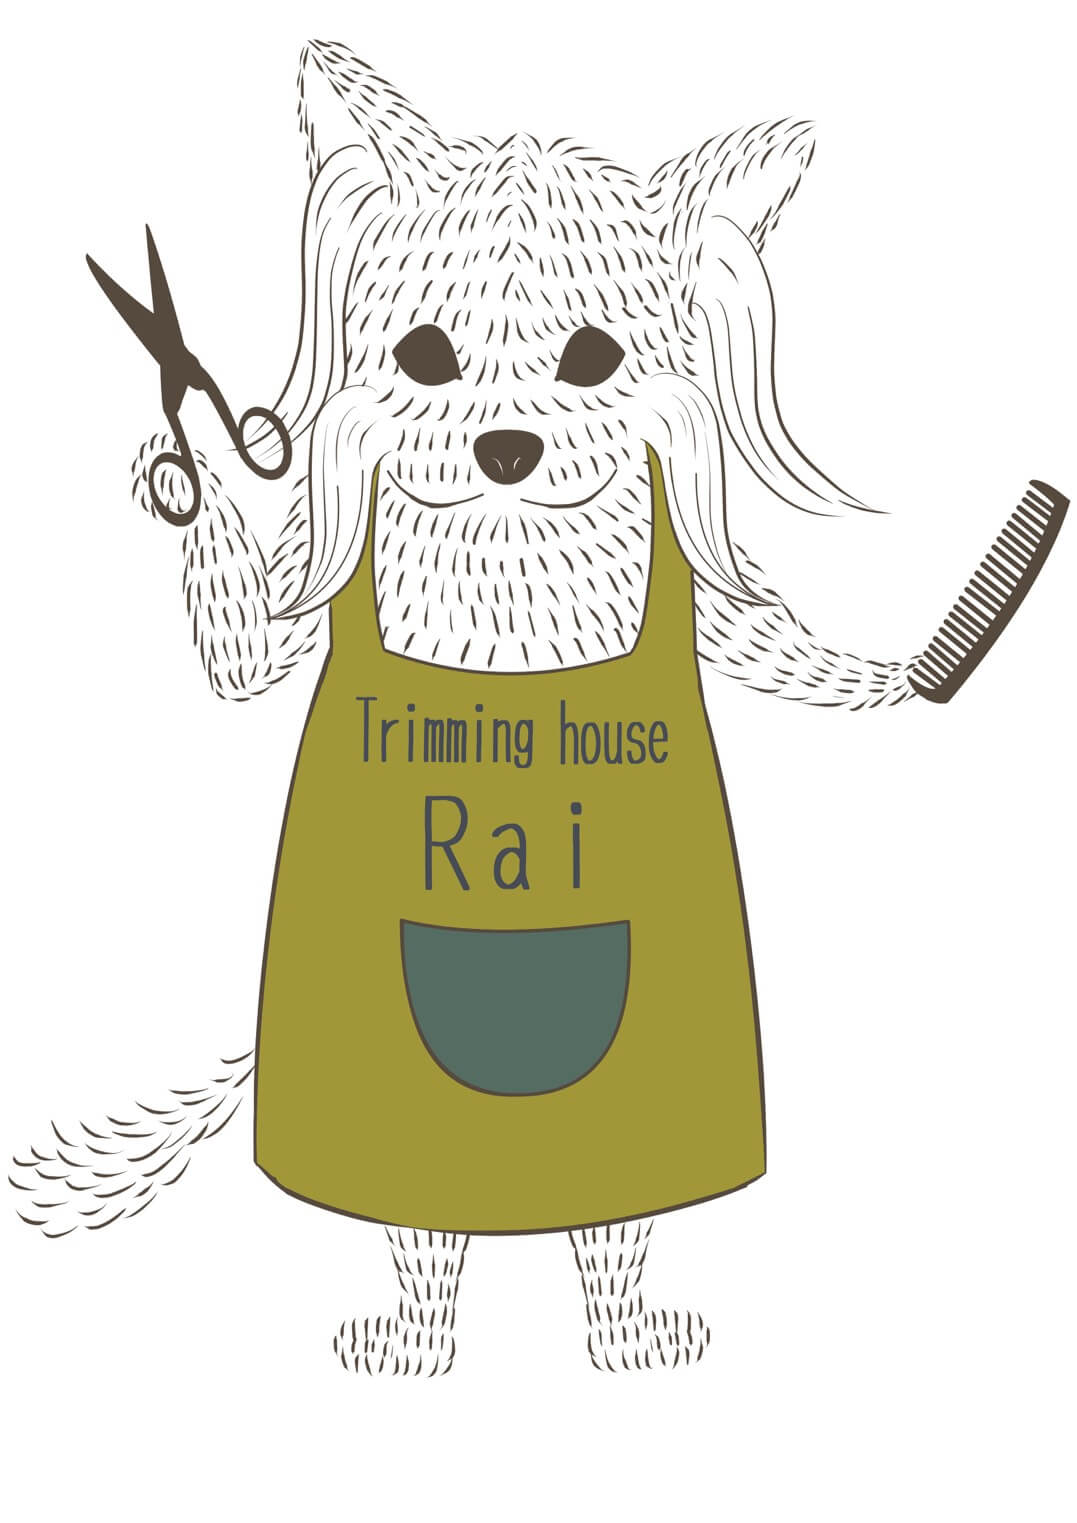 Trimming house Raiのマスコットキャラクター